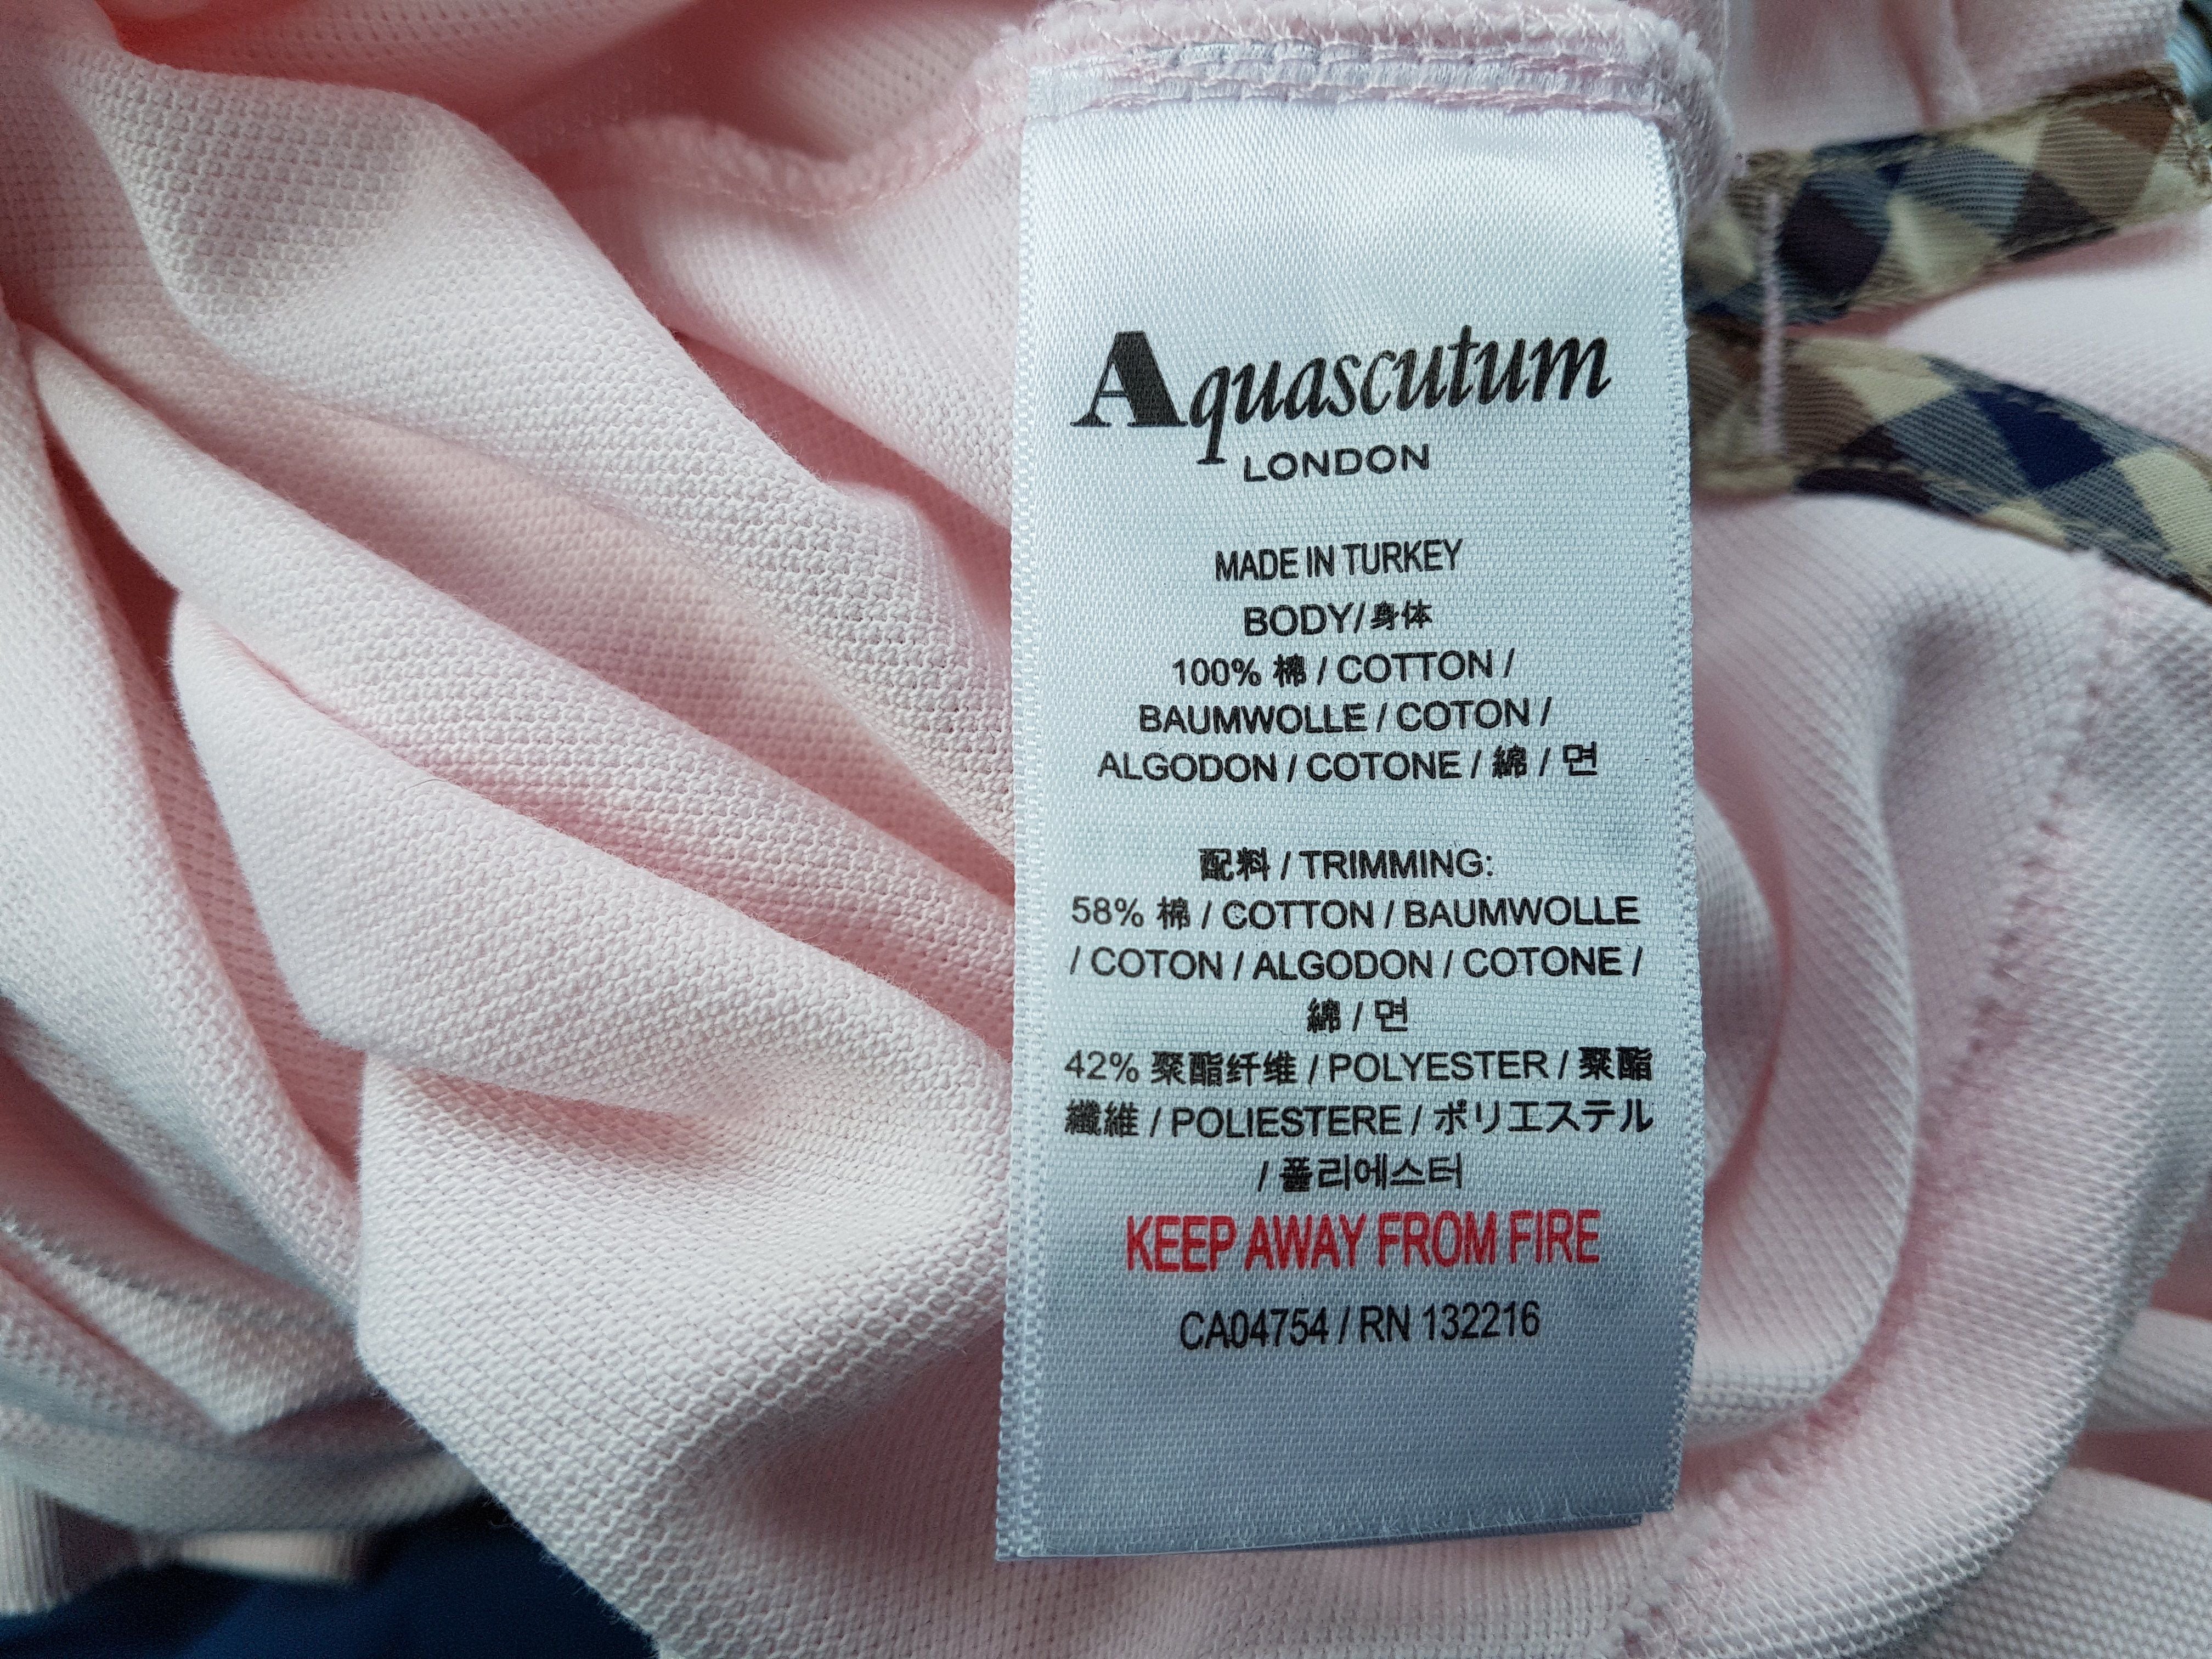 Polo Aquascutum legit check | Men's Clothing Forums